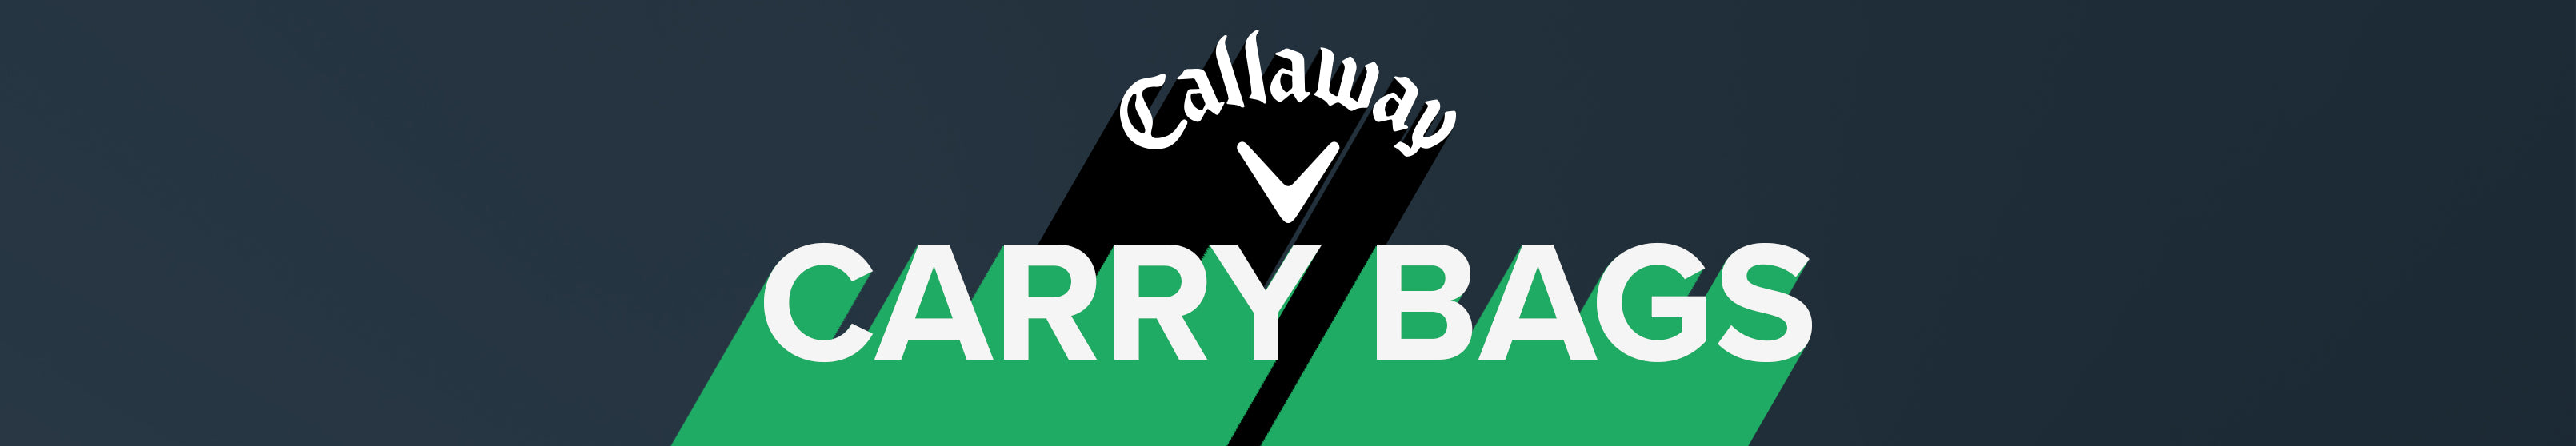 Callaway Carry Bags